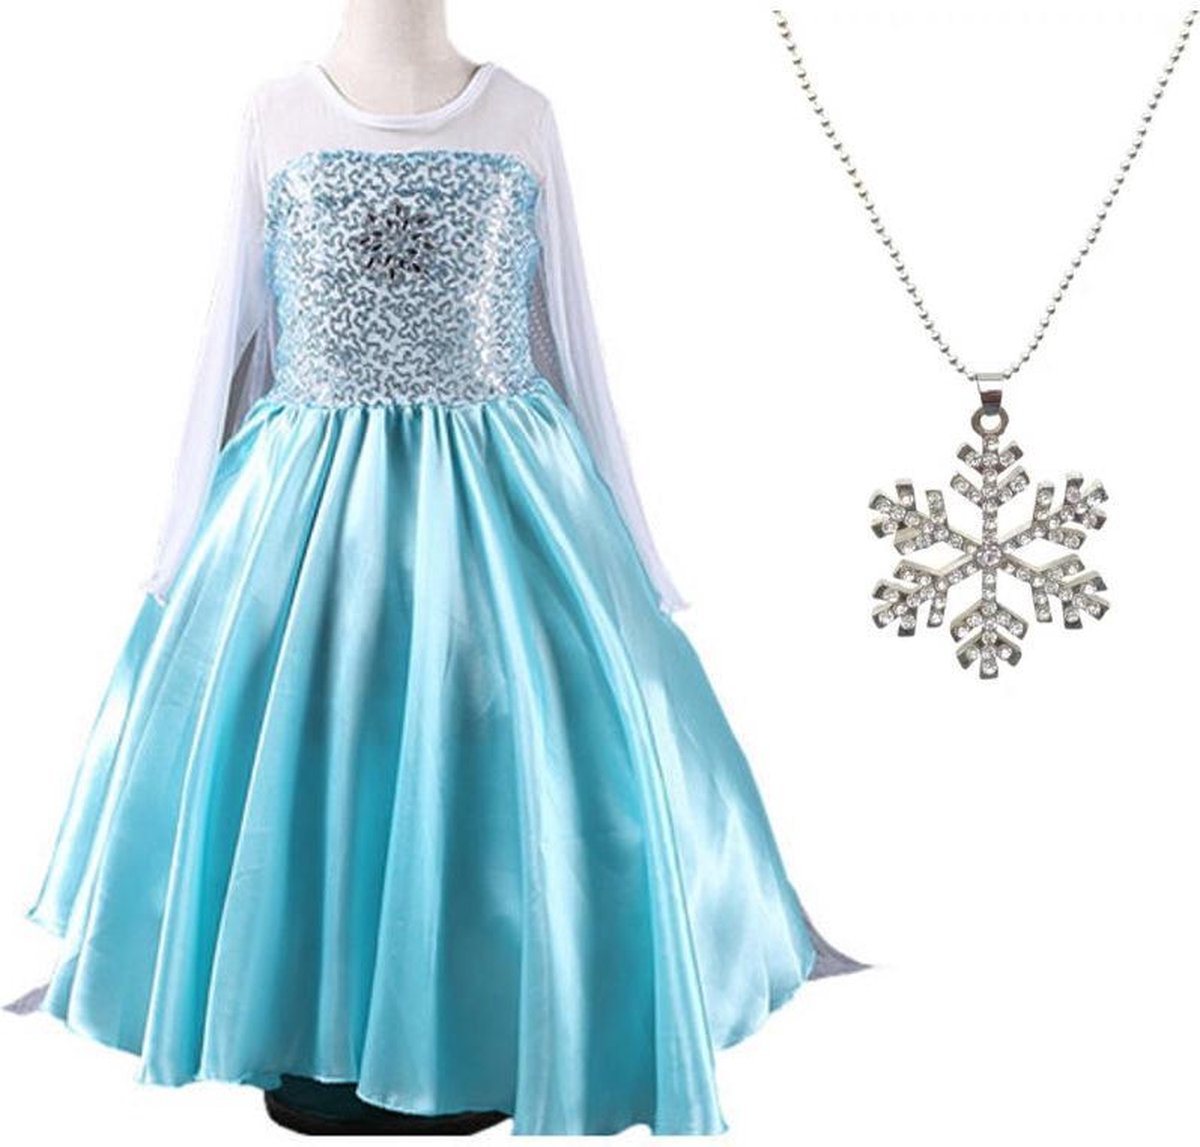 Elsa jurk jurk Ster 140 met sleep + Frozen ketting maat 134-140 Prinsessen jurk verkleedkleding